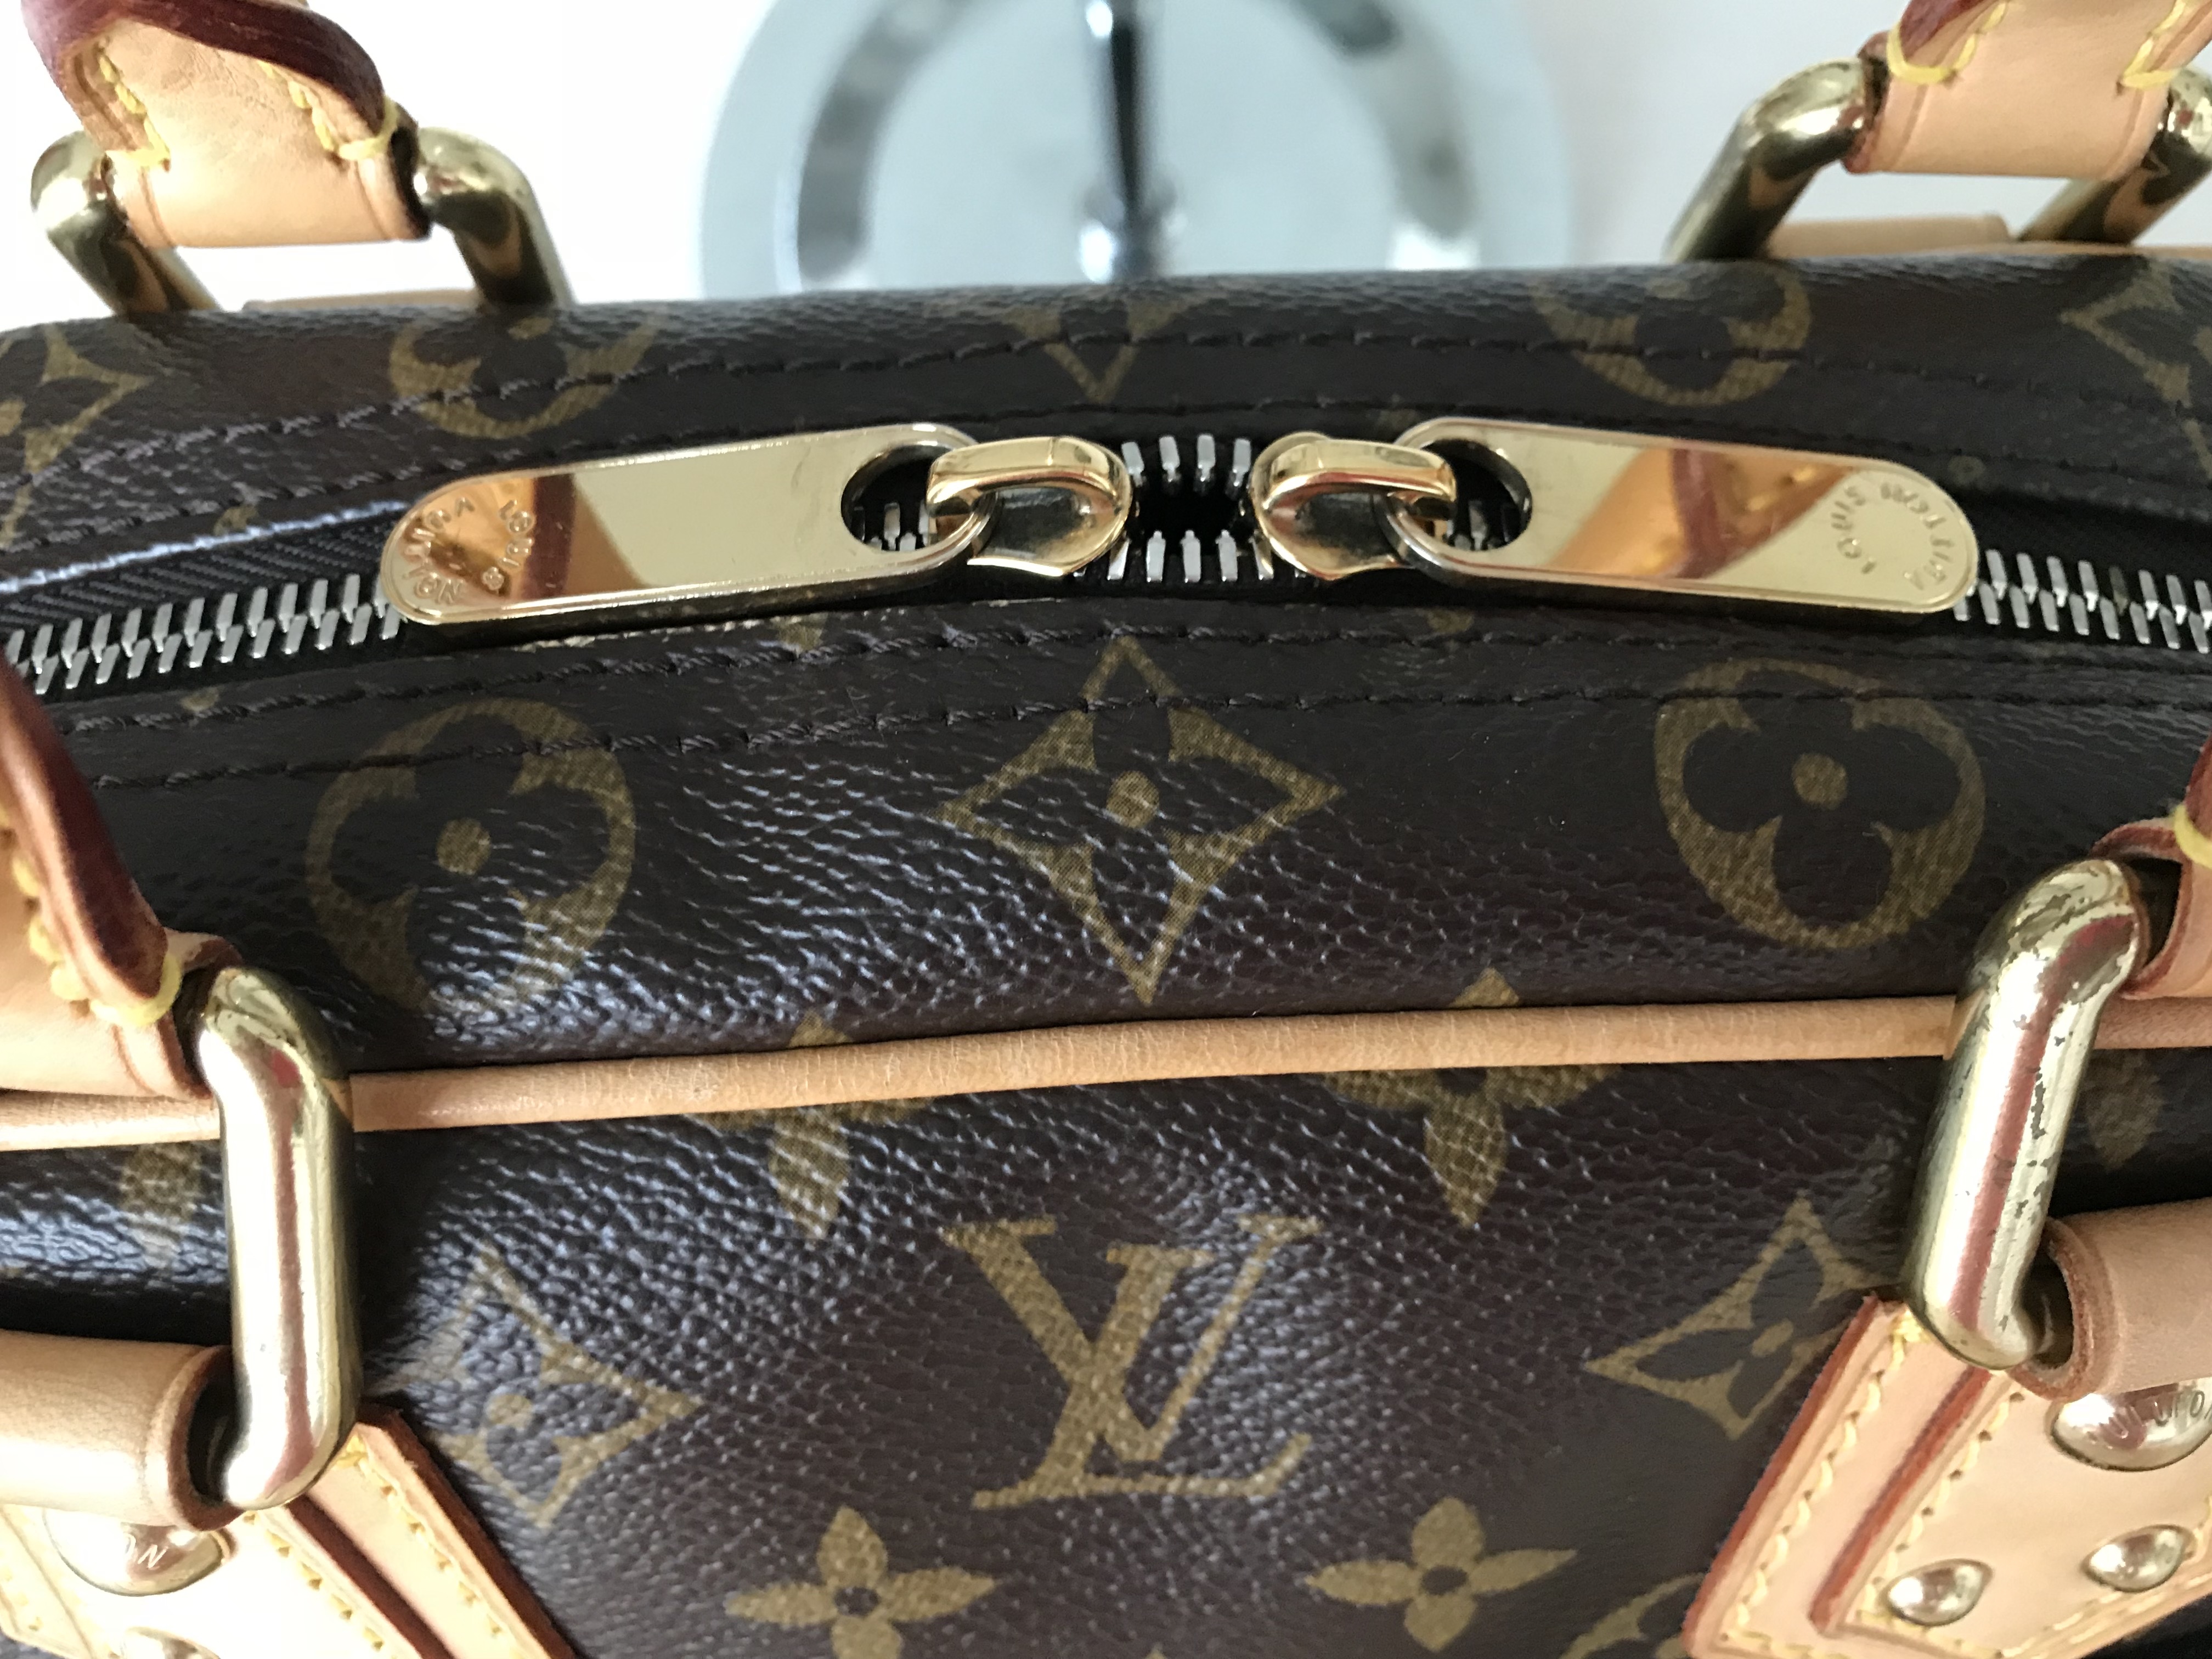 Starbags - Louis Vuitton Manhattan PM bag!